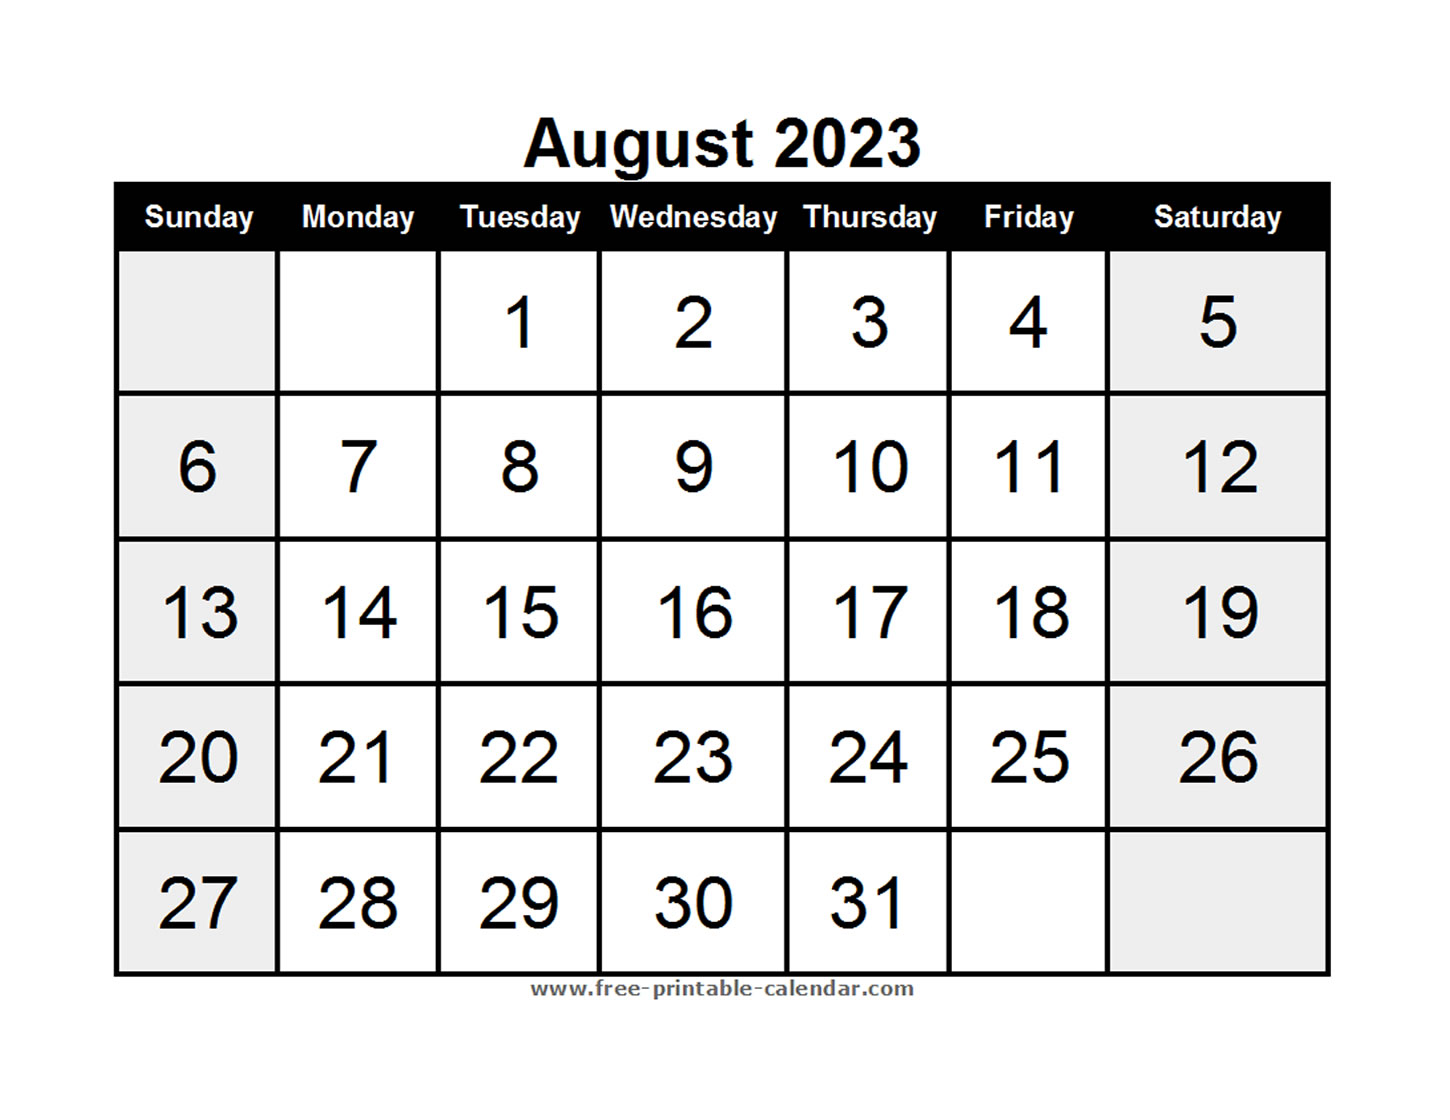 august-2023-print-free-calendar-riset